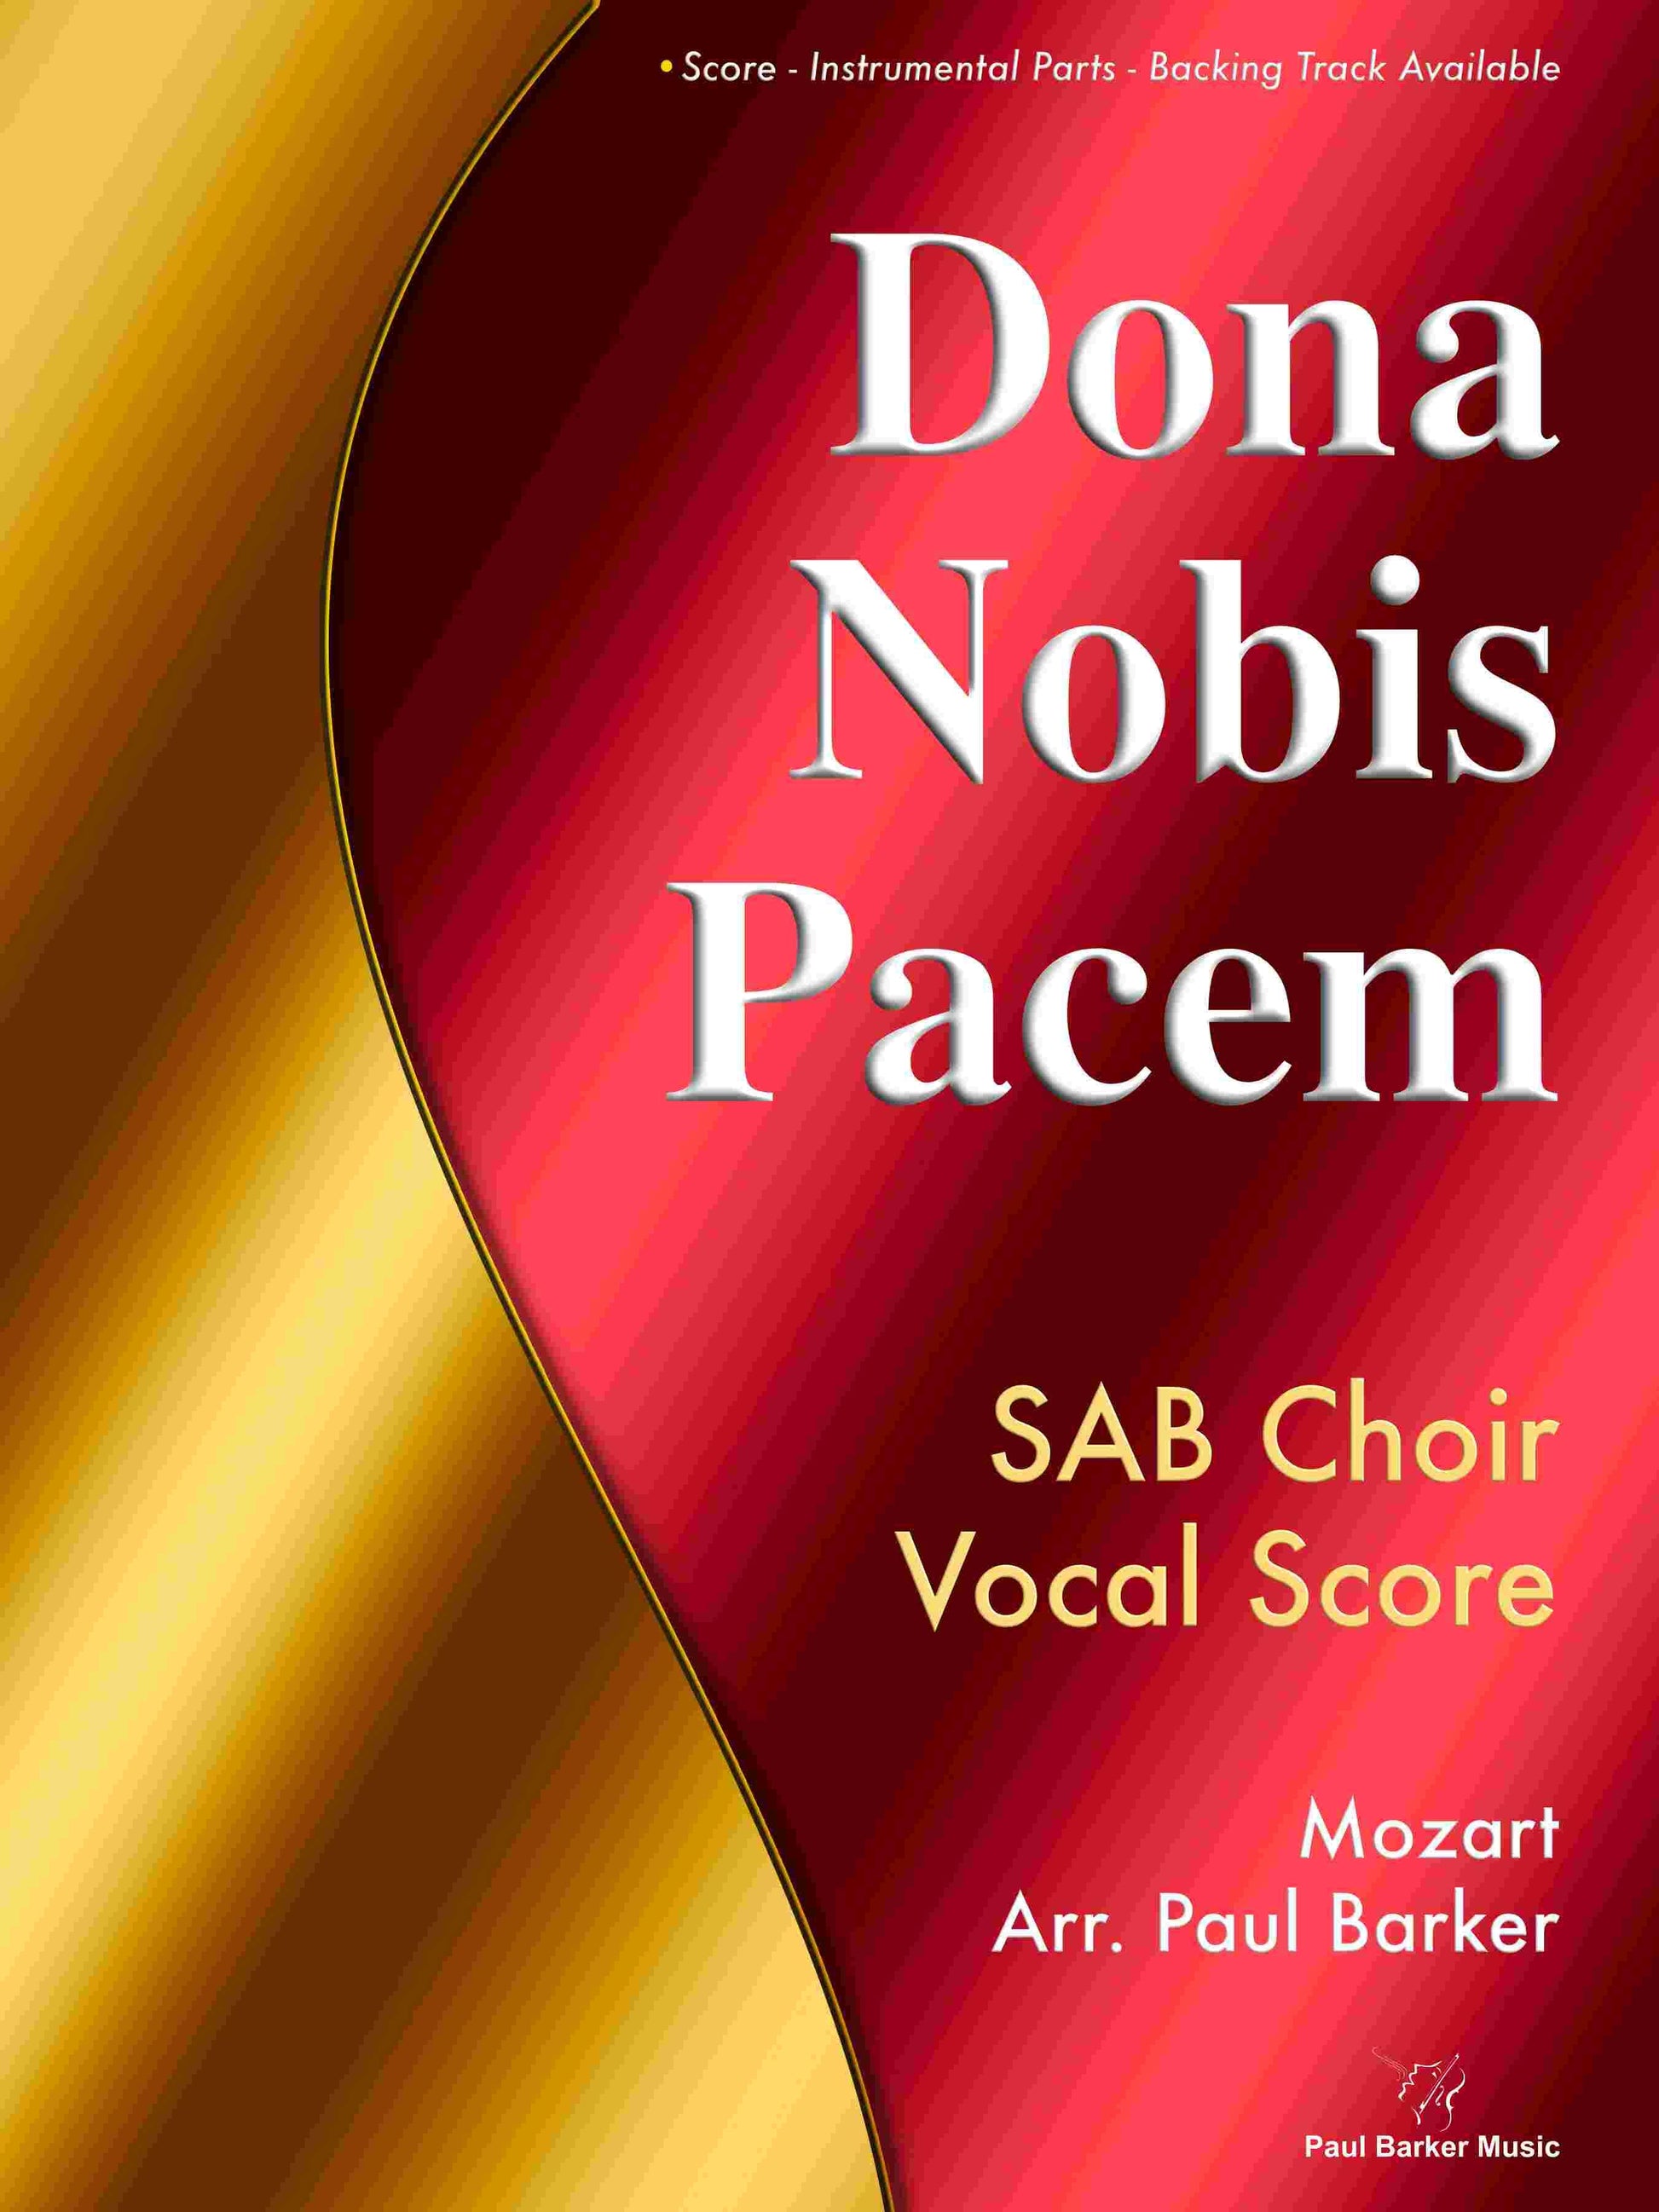 Dona Nobis Pacem - Paul Barker Music 